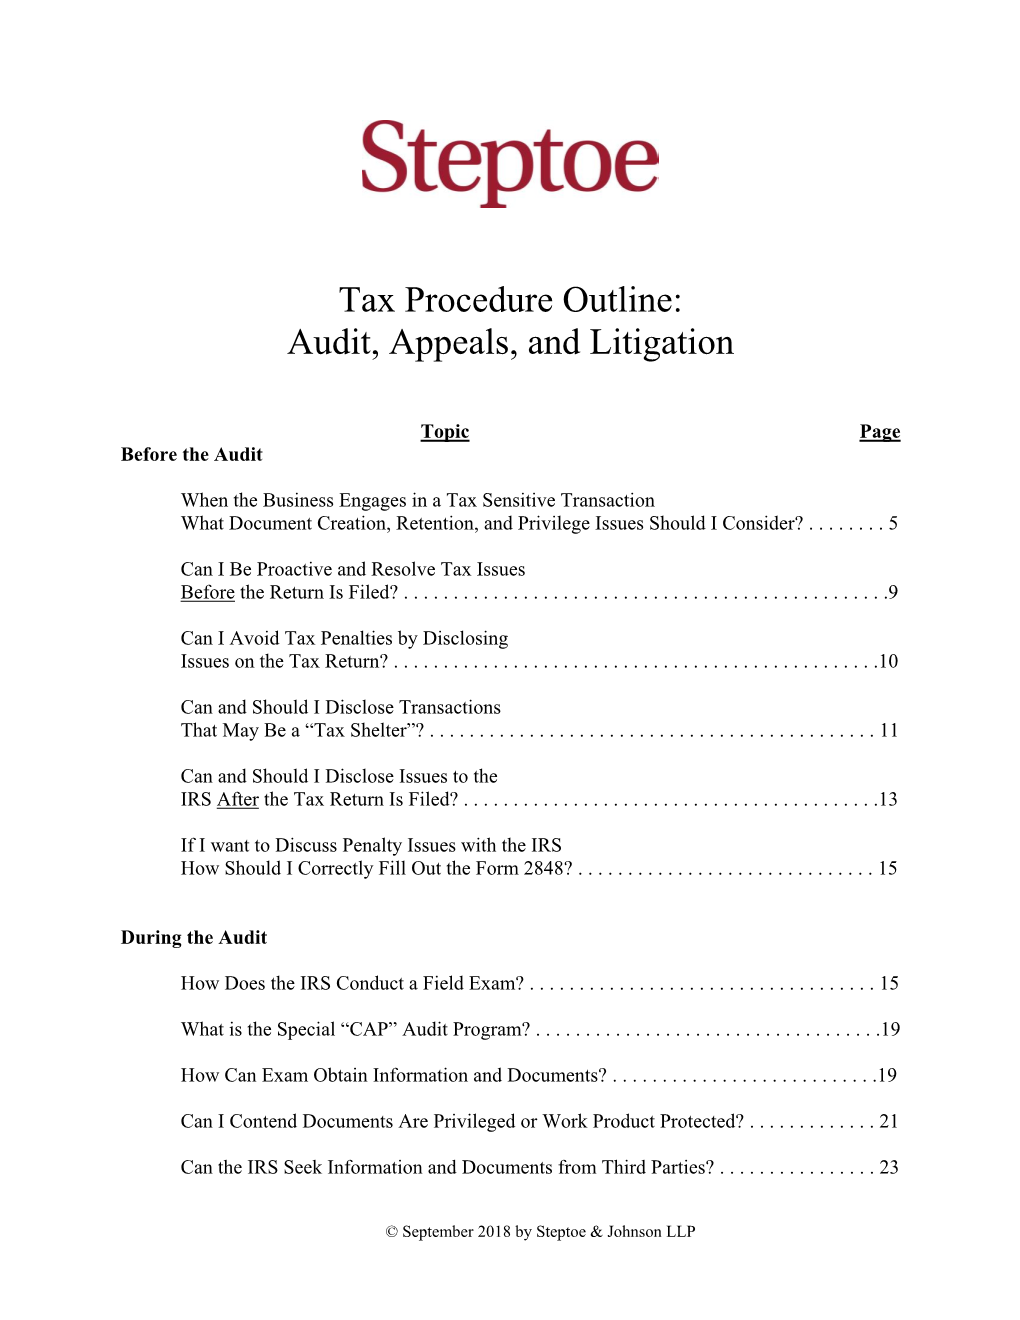 Tax Procedure Outline: Audit, Appeals, and Litigation (PDF)